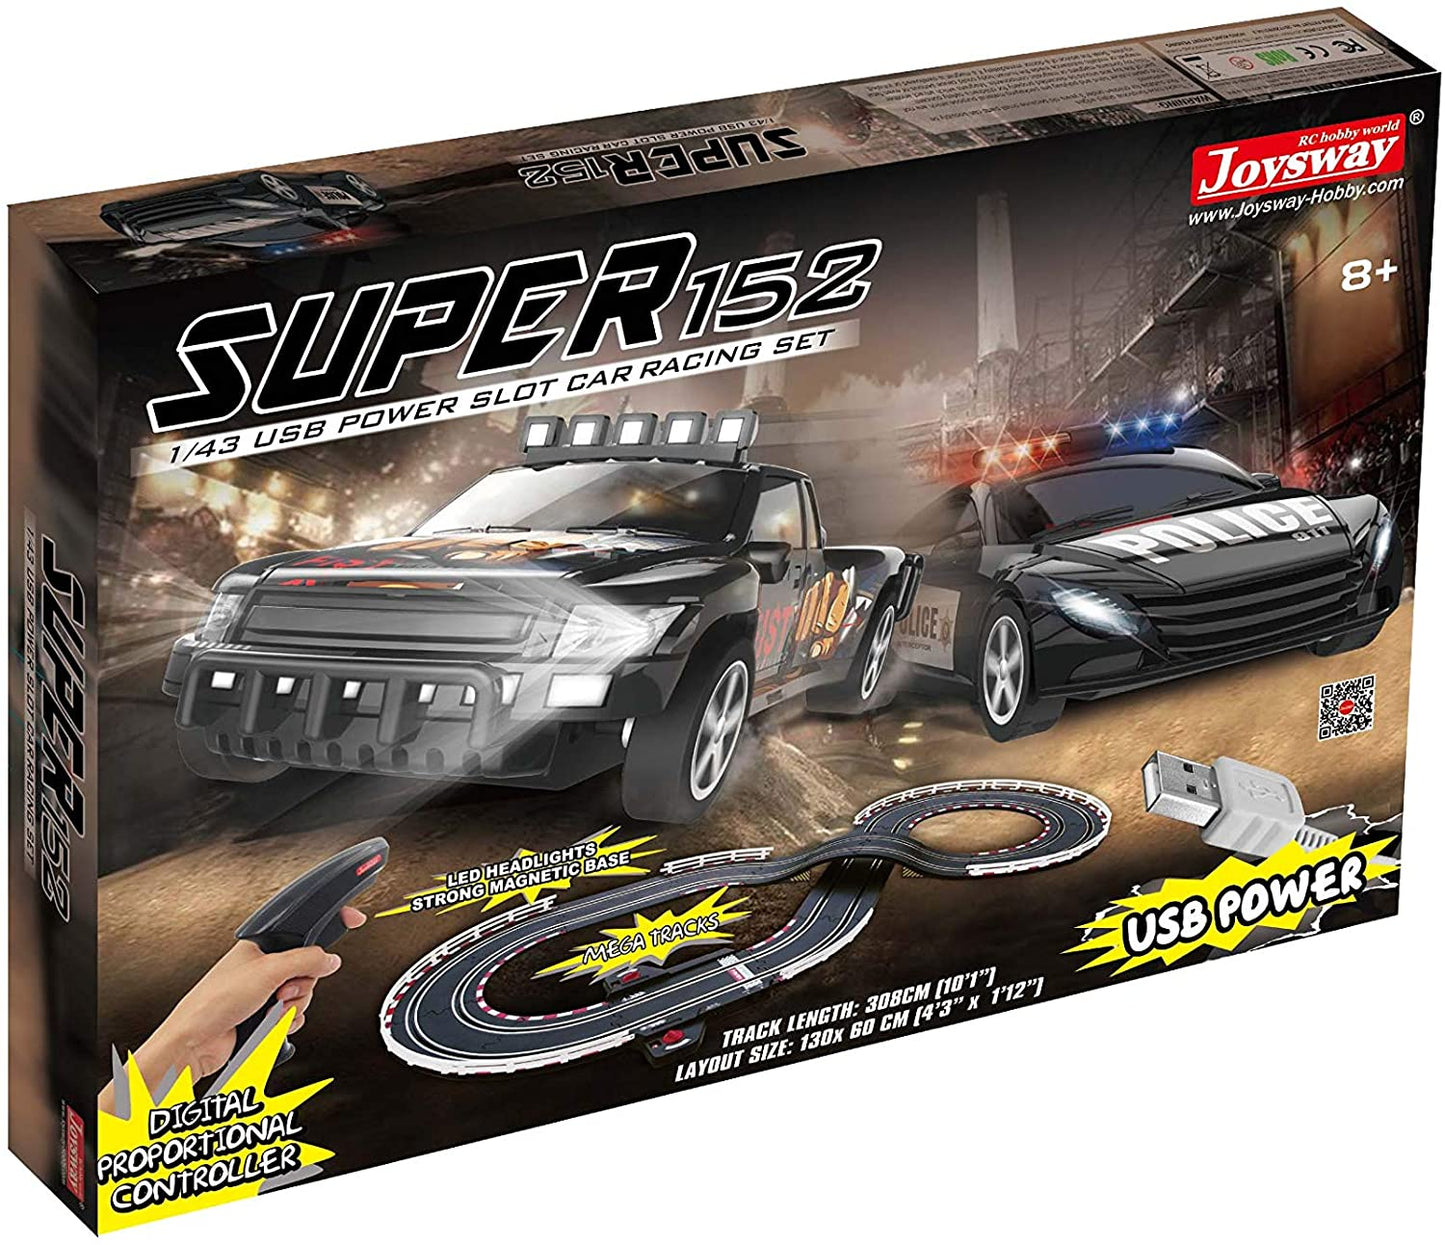 Slot Car Racing Set 2152 Joysway Super 152 USB Power